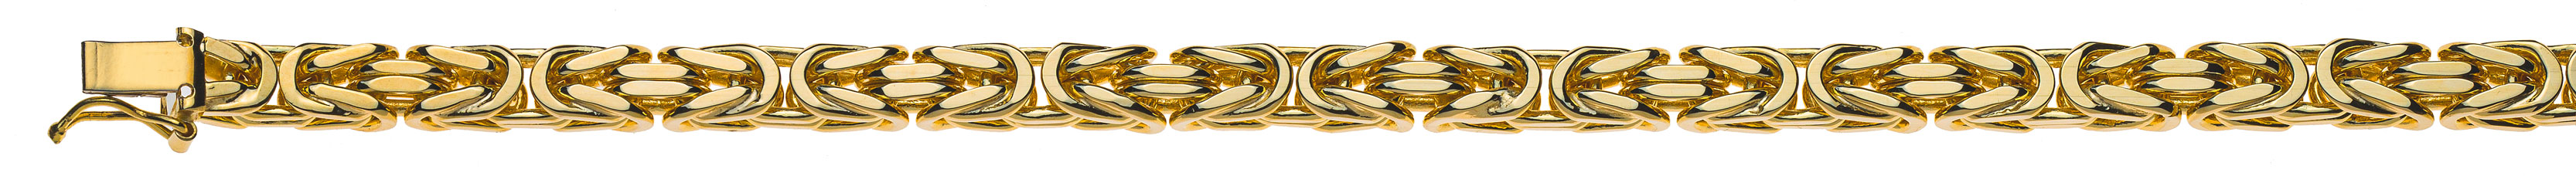 AURONOS Prestige Necklace yellow gold 18K king chain 45cm 5mm